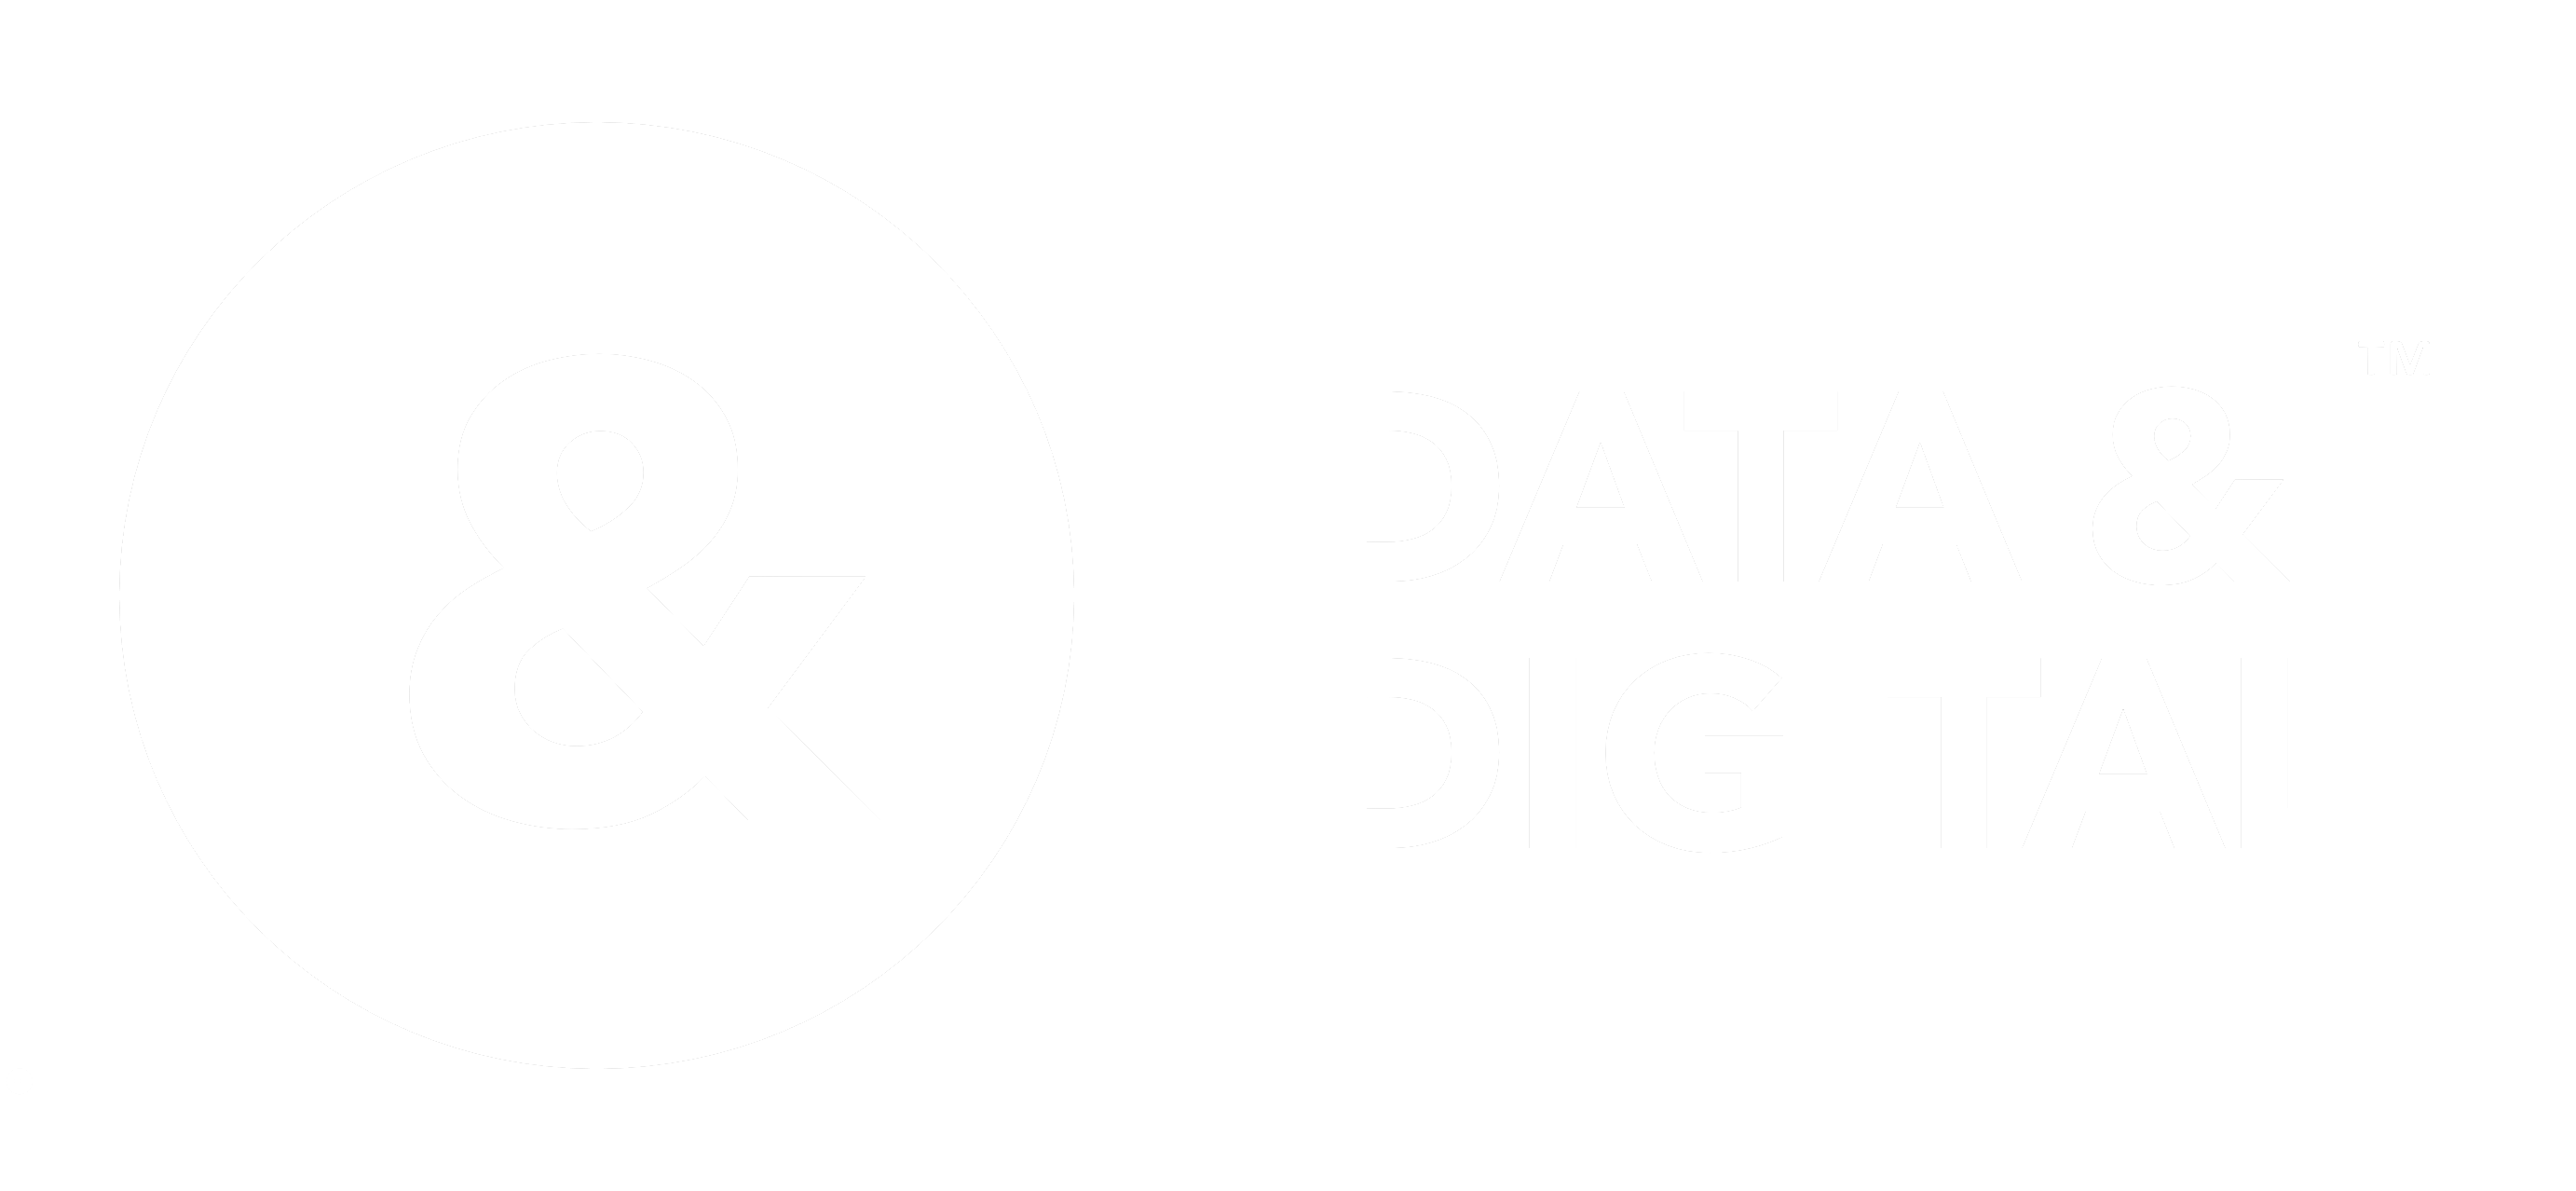 Data & Digital